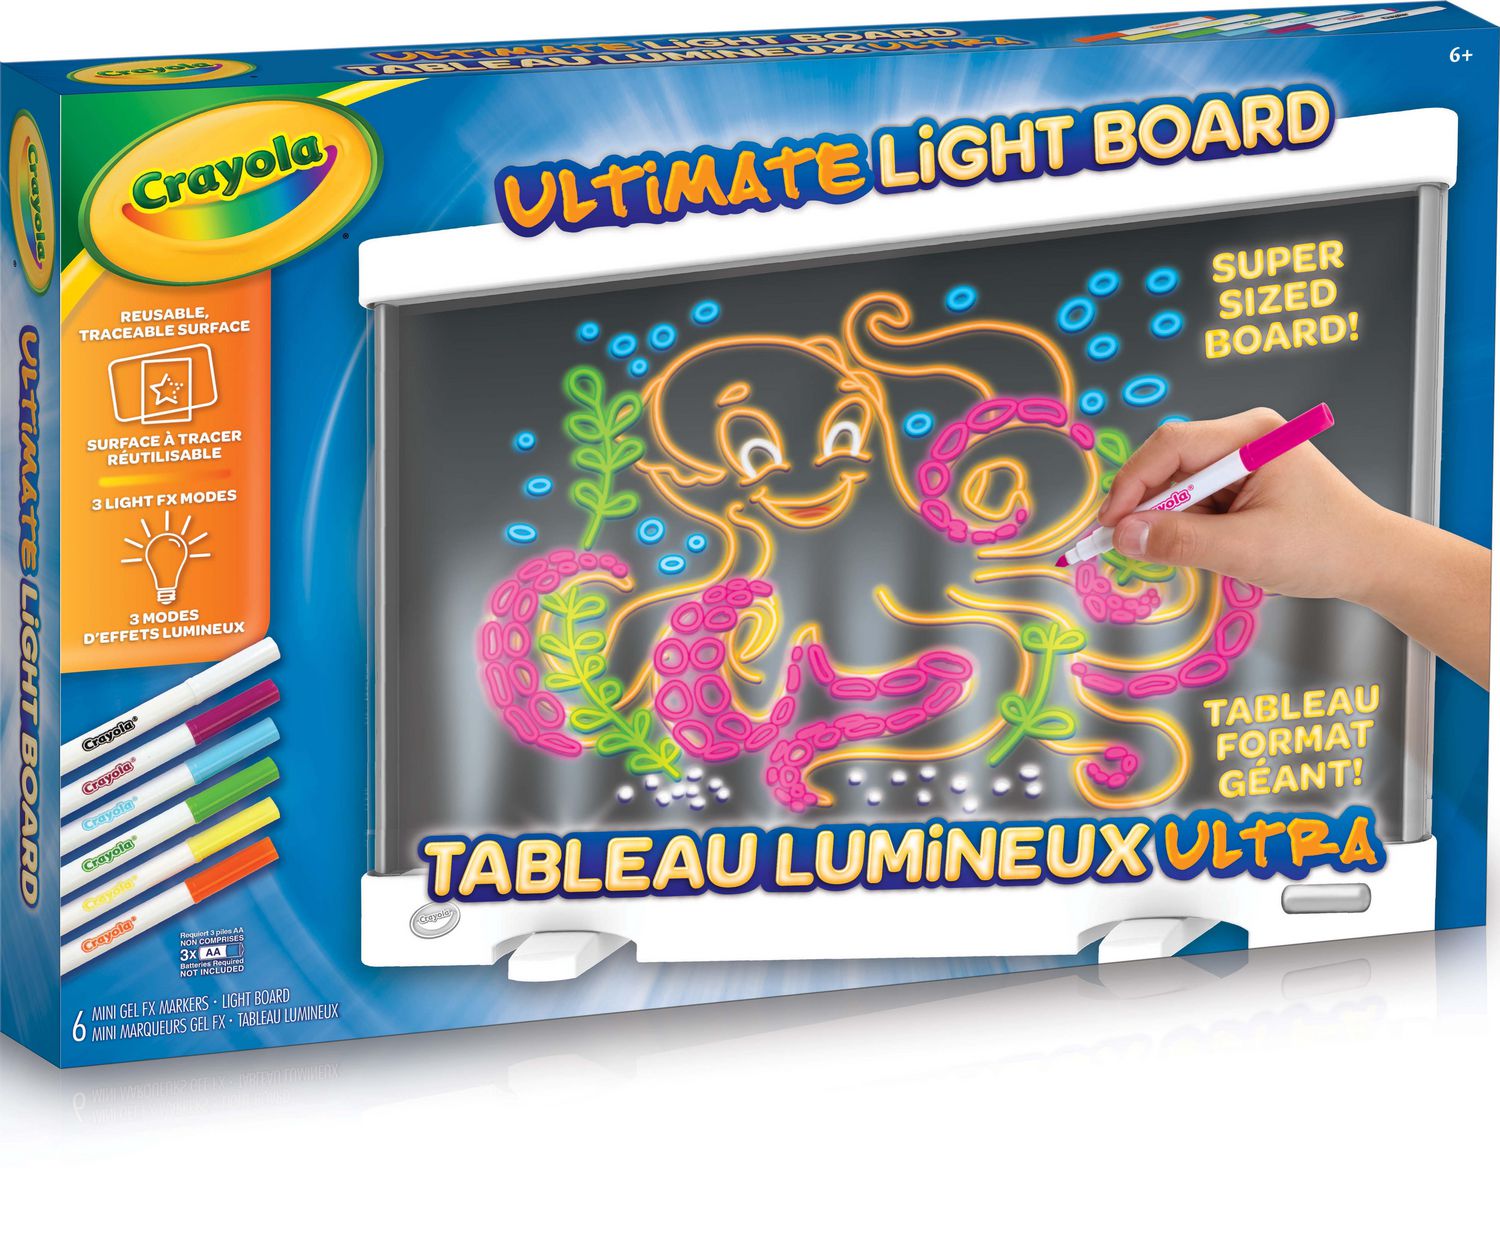 Crayola Ultimate Light Board, Light Up Art Board